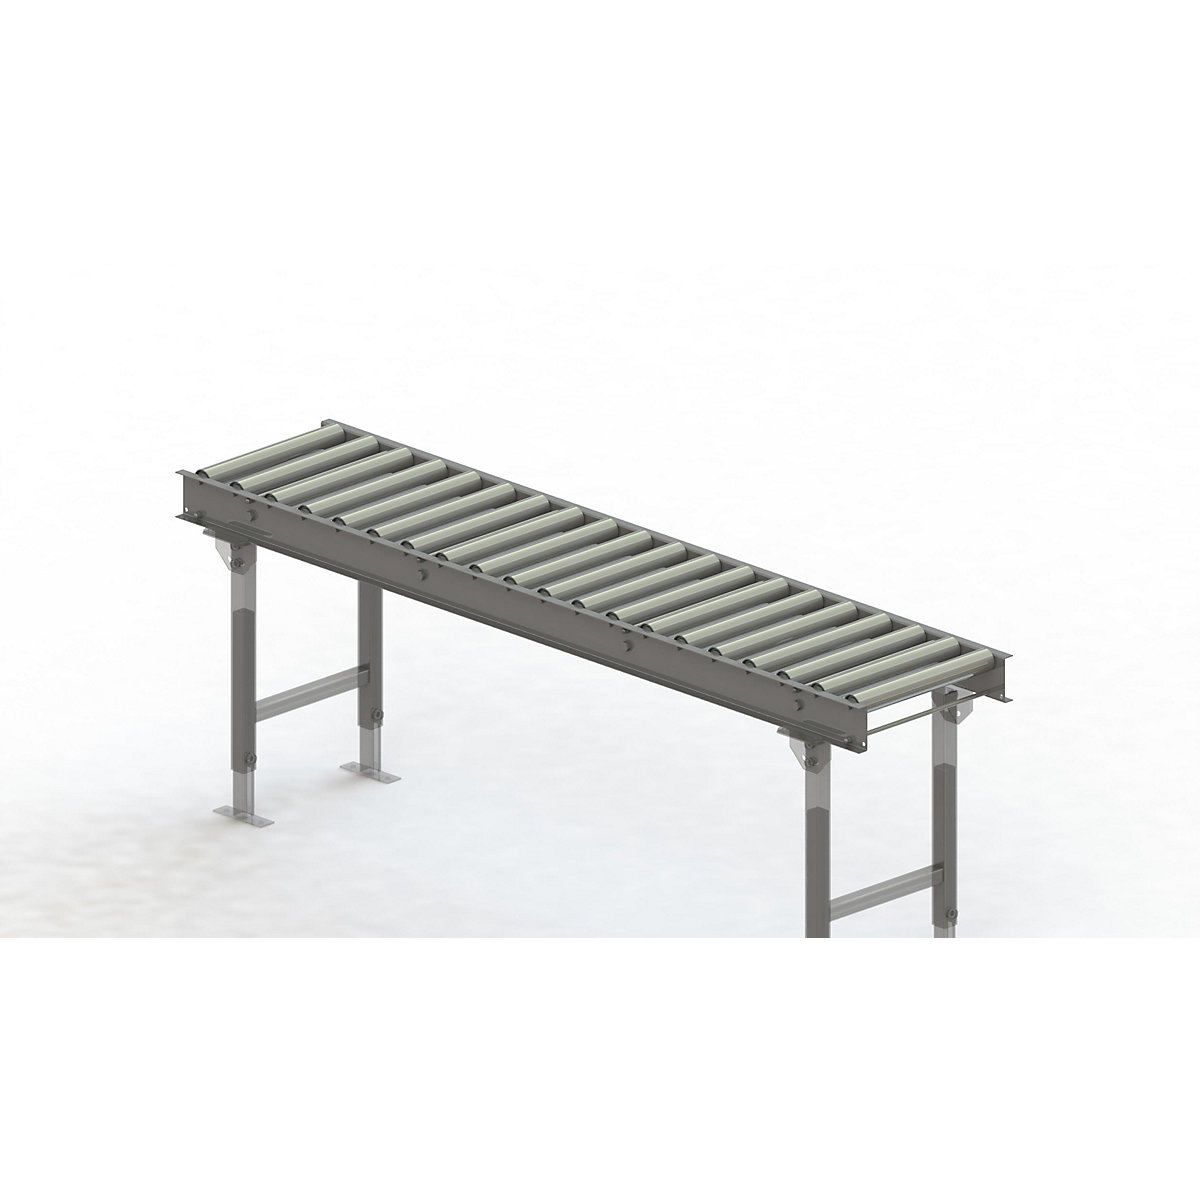 Gura – Roller conveyor, steel frame with zinc plated steel rollers, track width 400 mm, distance between axles 100 mm, length 2 m